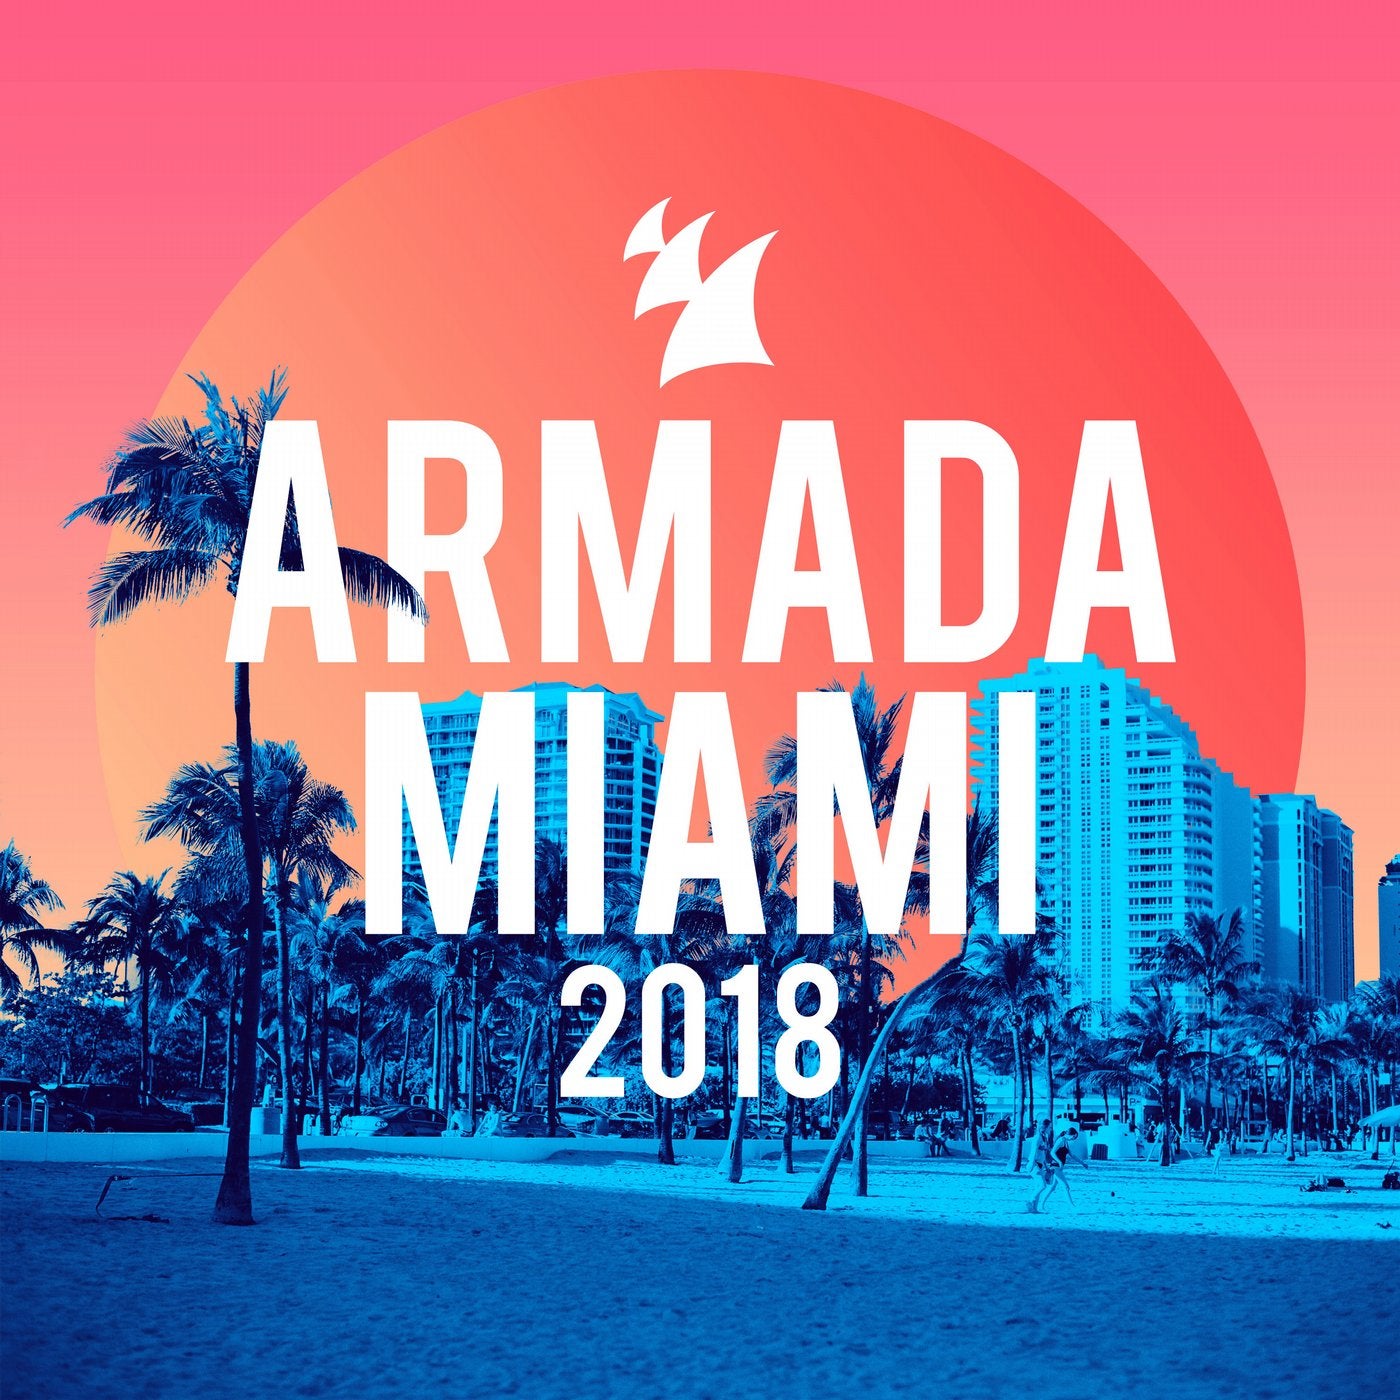 Armada Miami 2018 - Extended Version